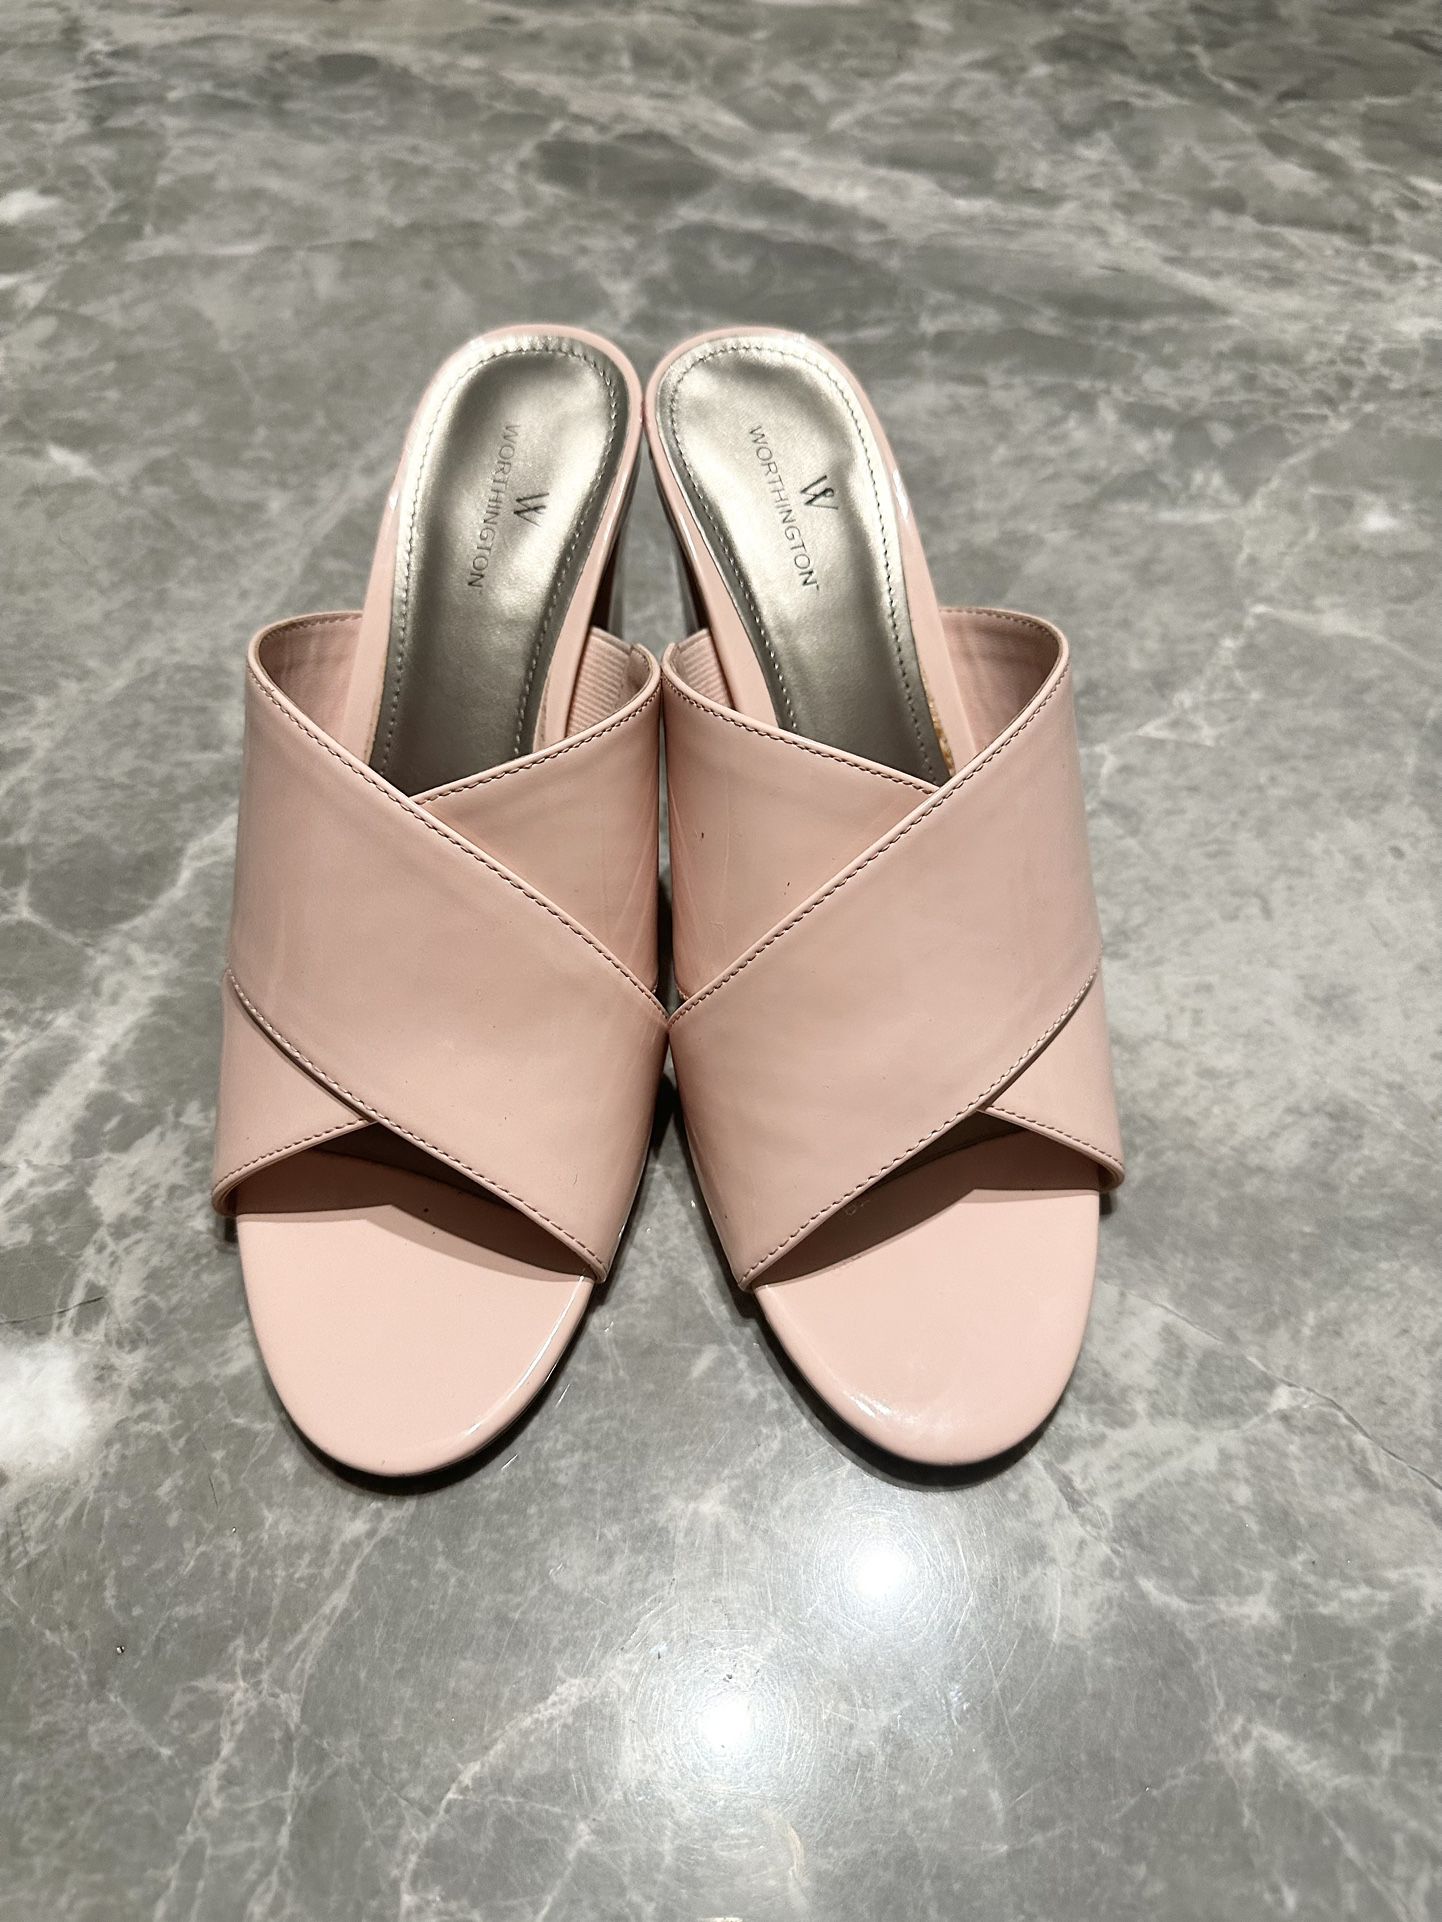 Worthington Powder Pink Women's 9 Patent Leather Strappy Slip-on Dressy Heels